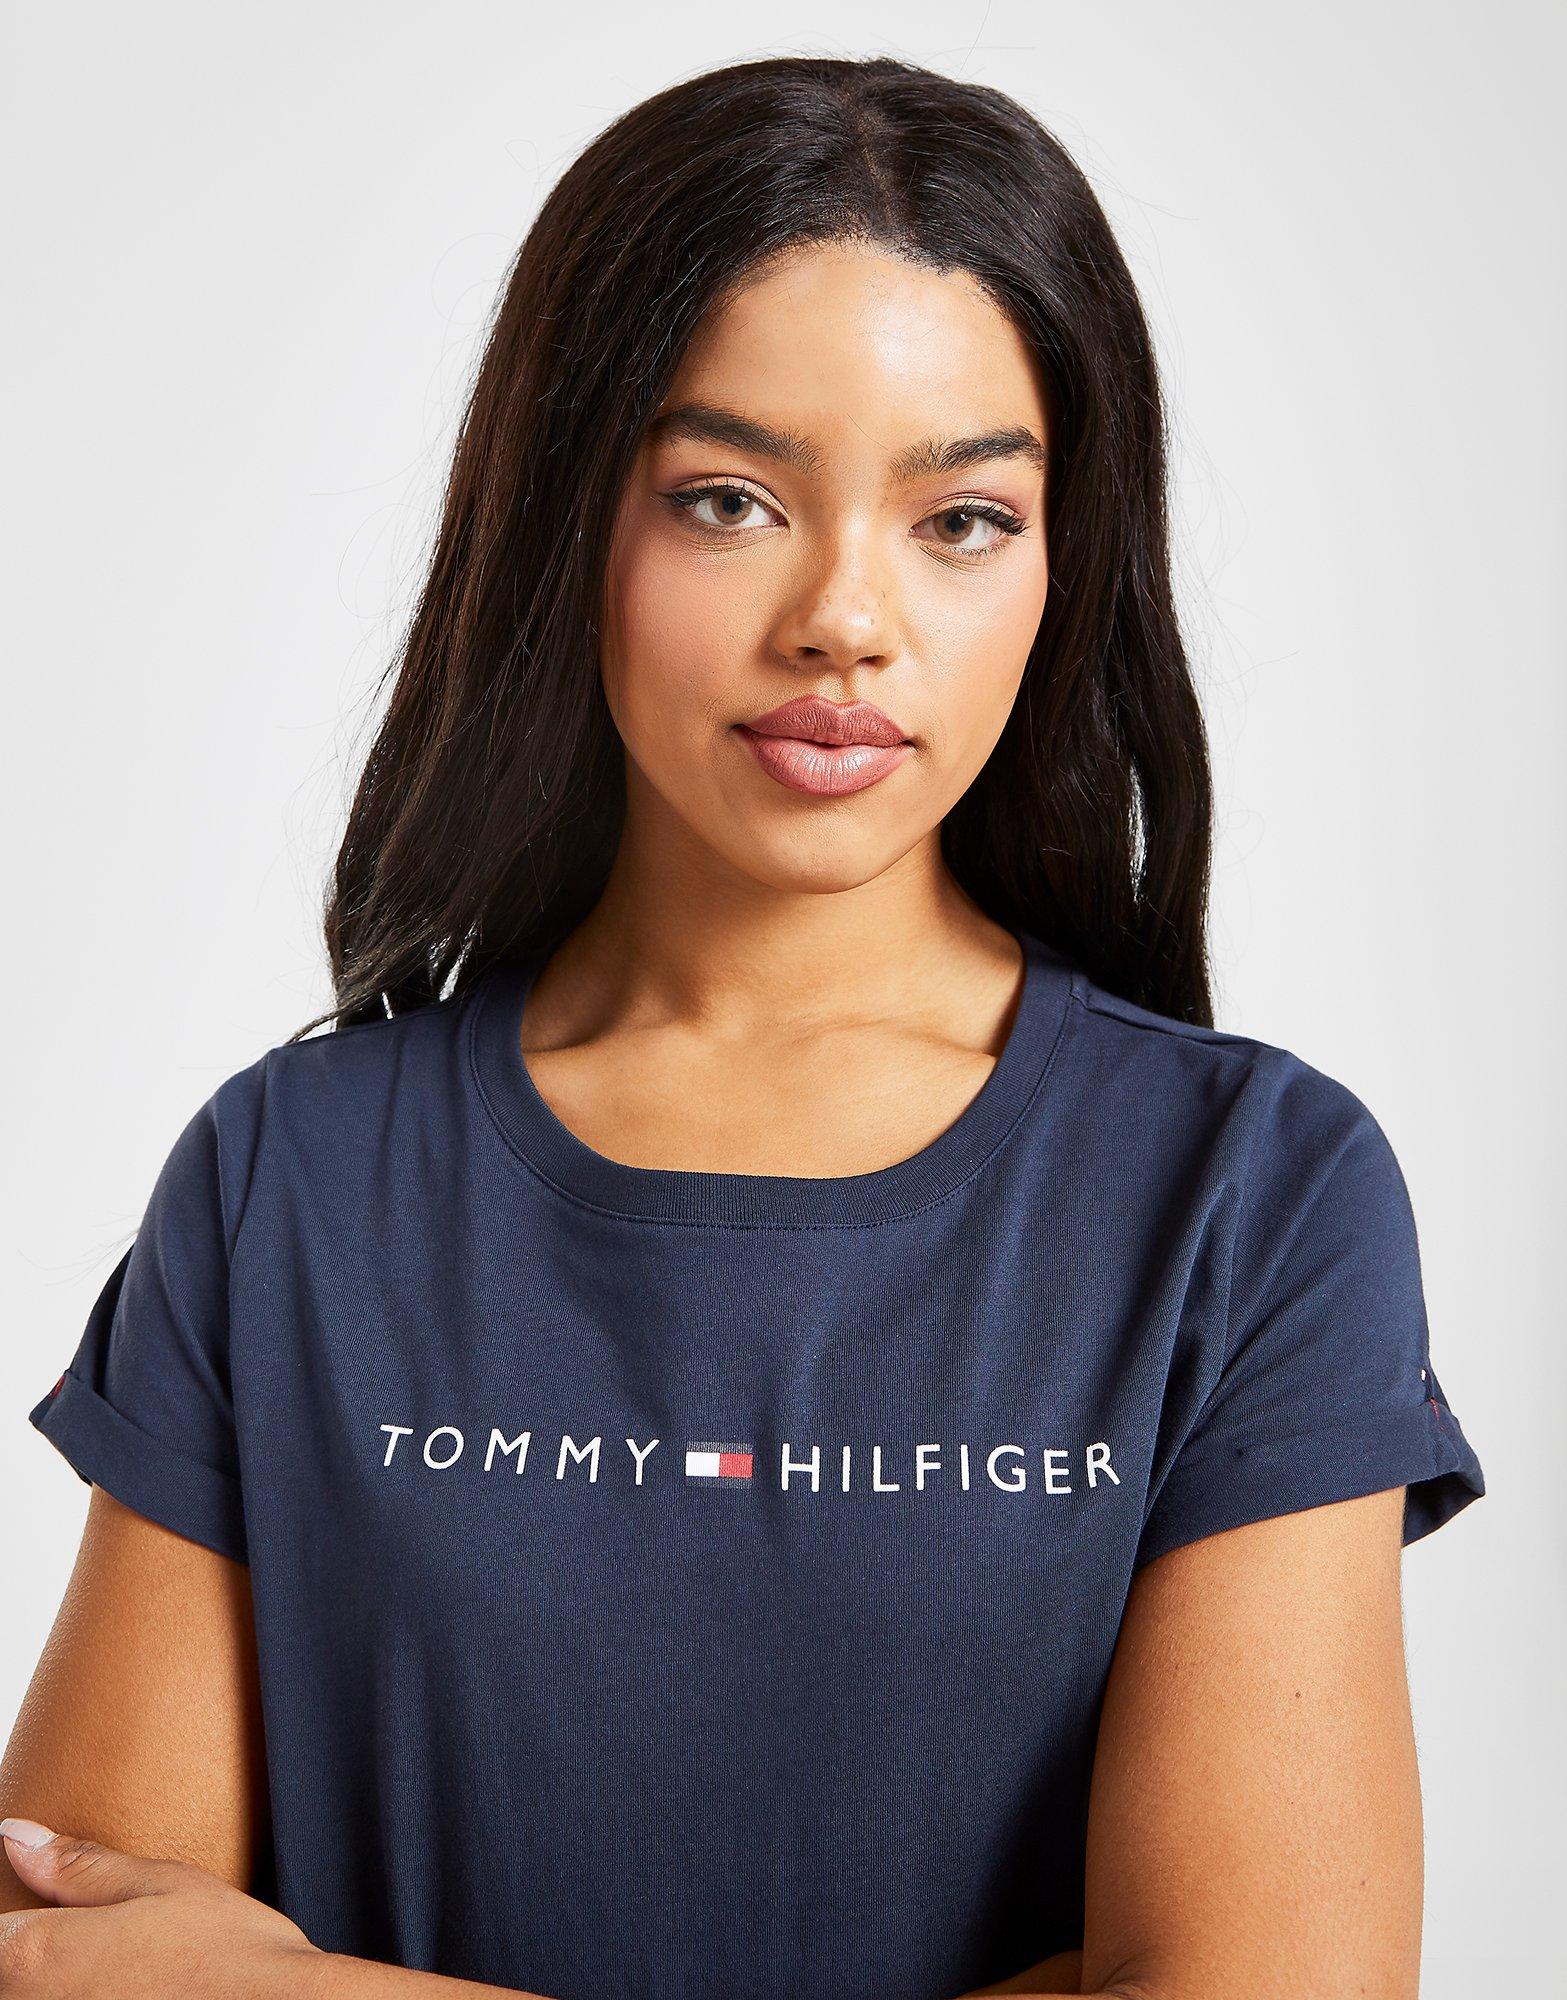 womens tommy hilfiger shirt